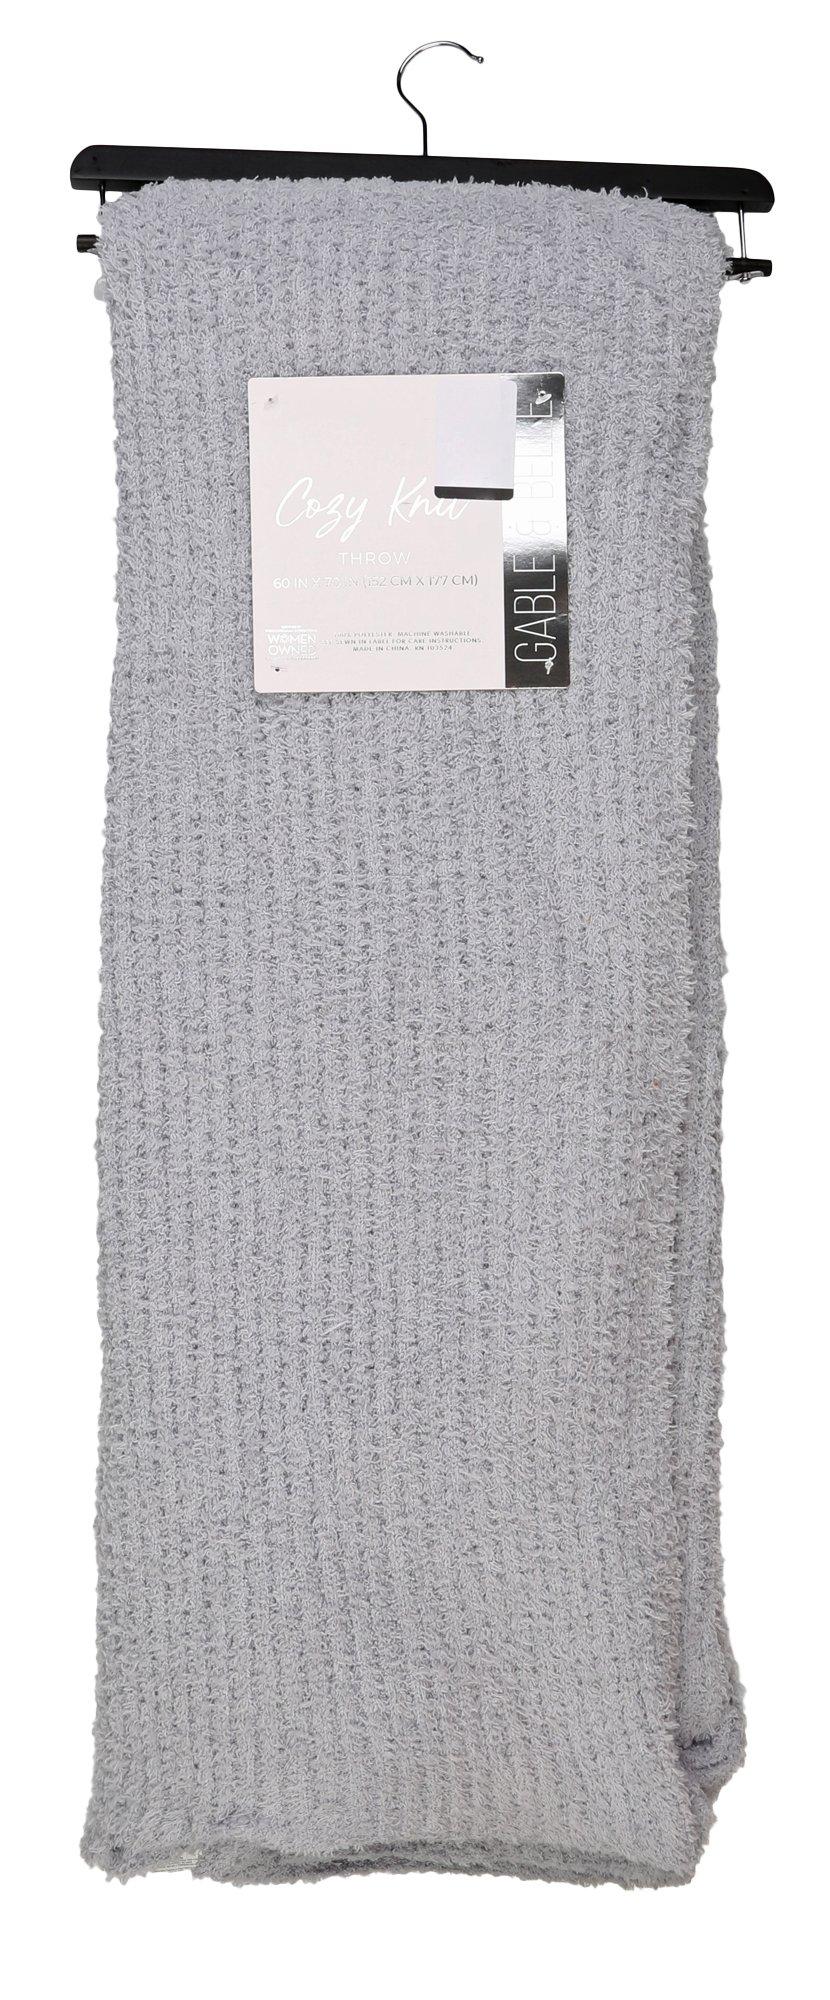 60x70 Solid Cozy Knit  Throw - Grey